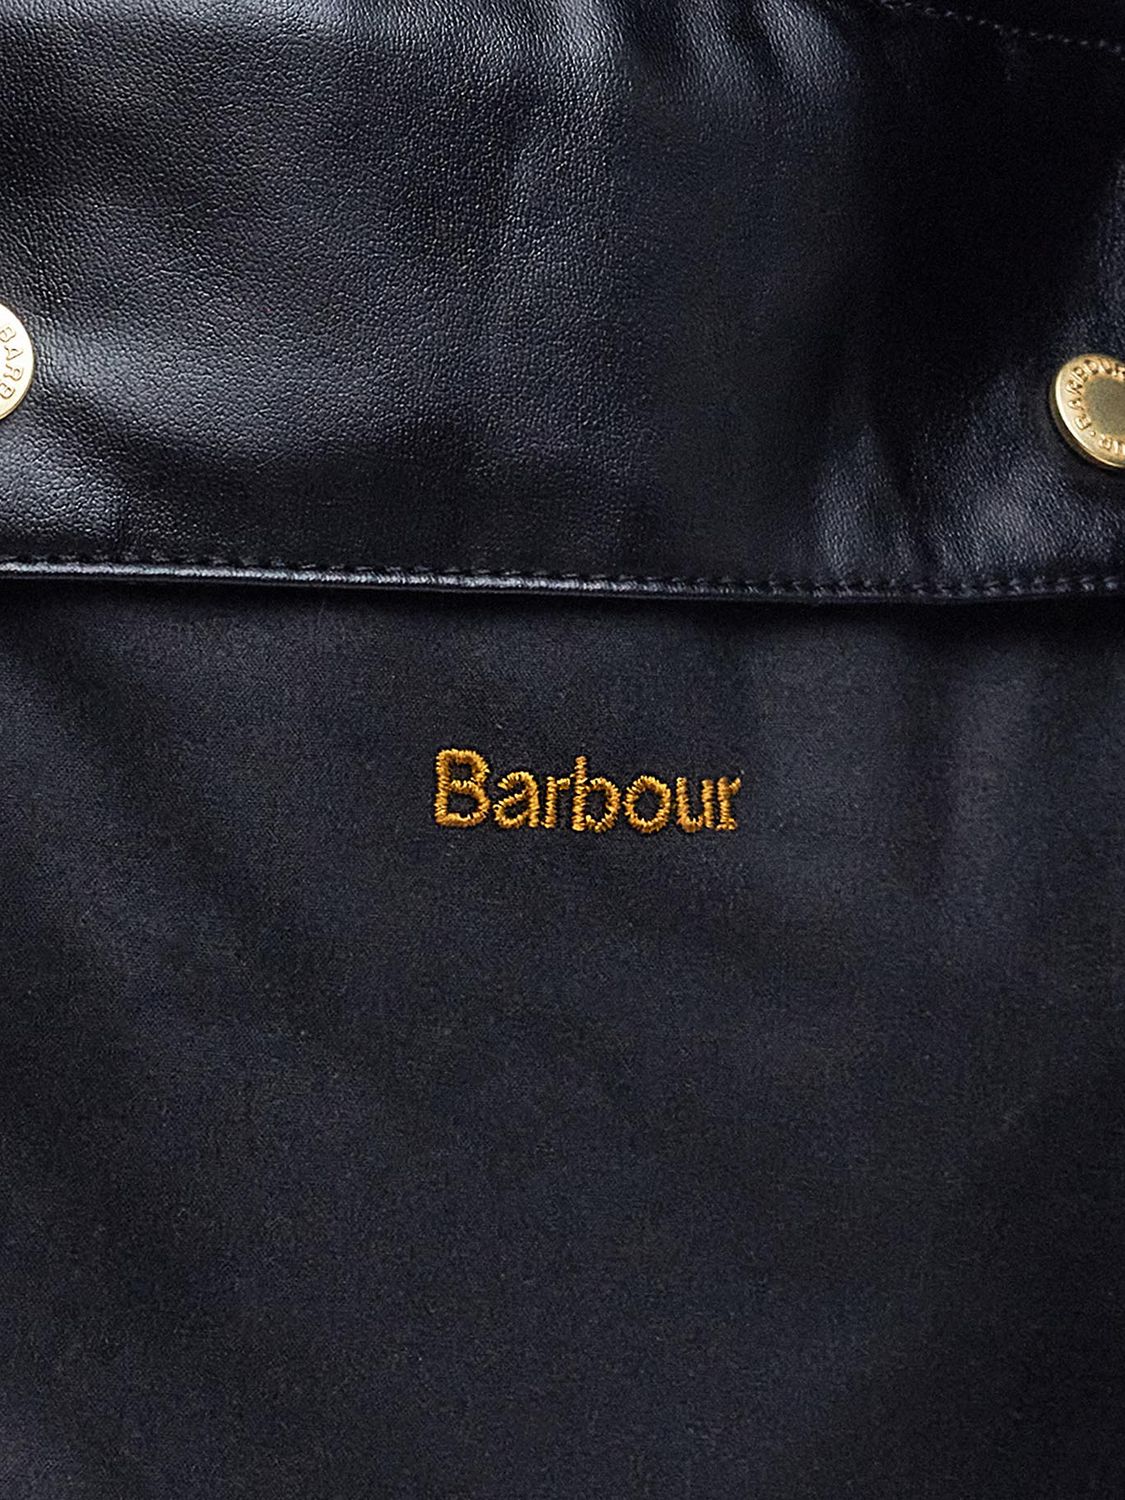 Barbour x House of Hackney Medola Waxed Cotton Coat, Black